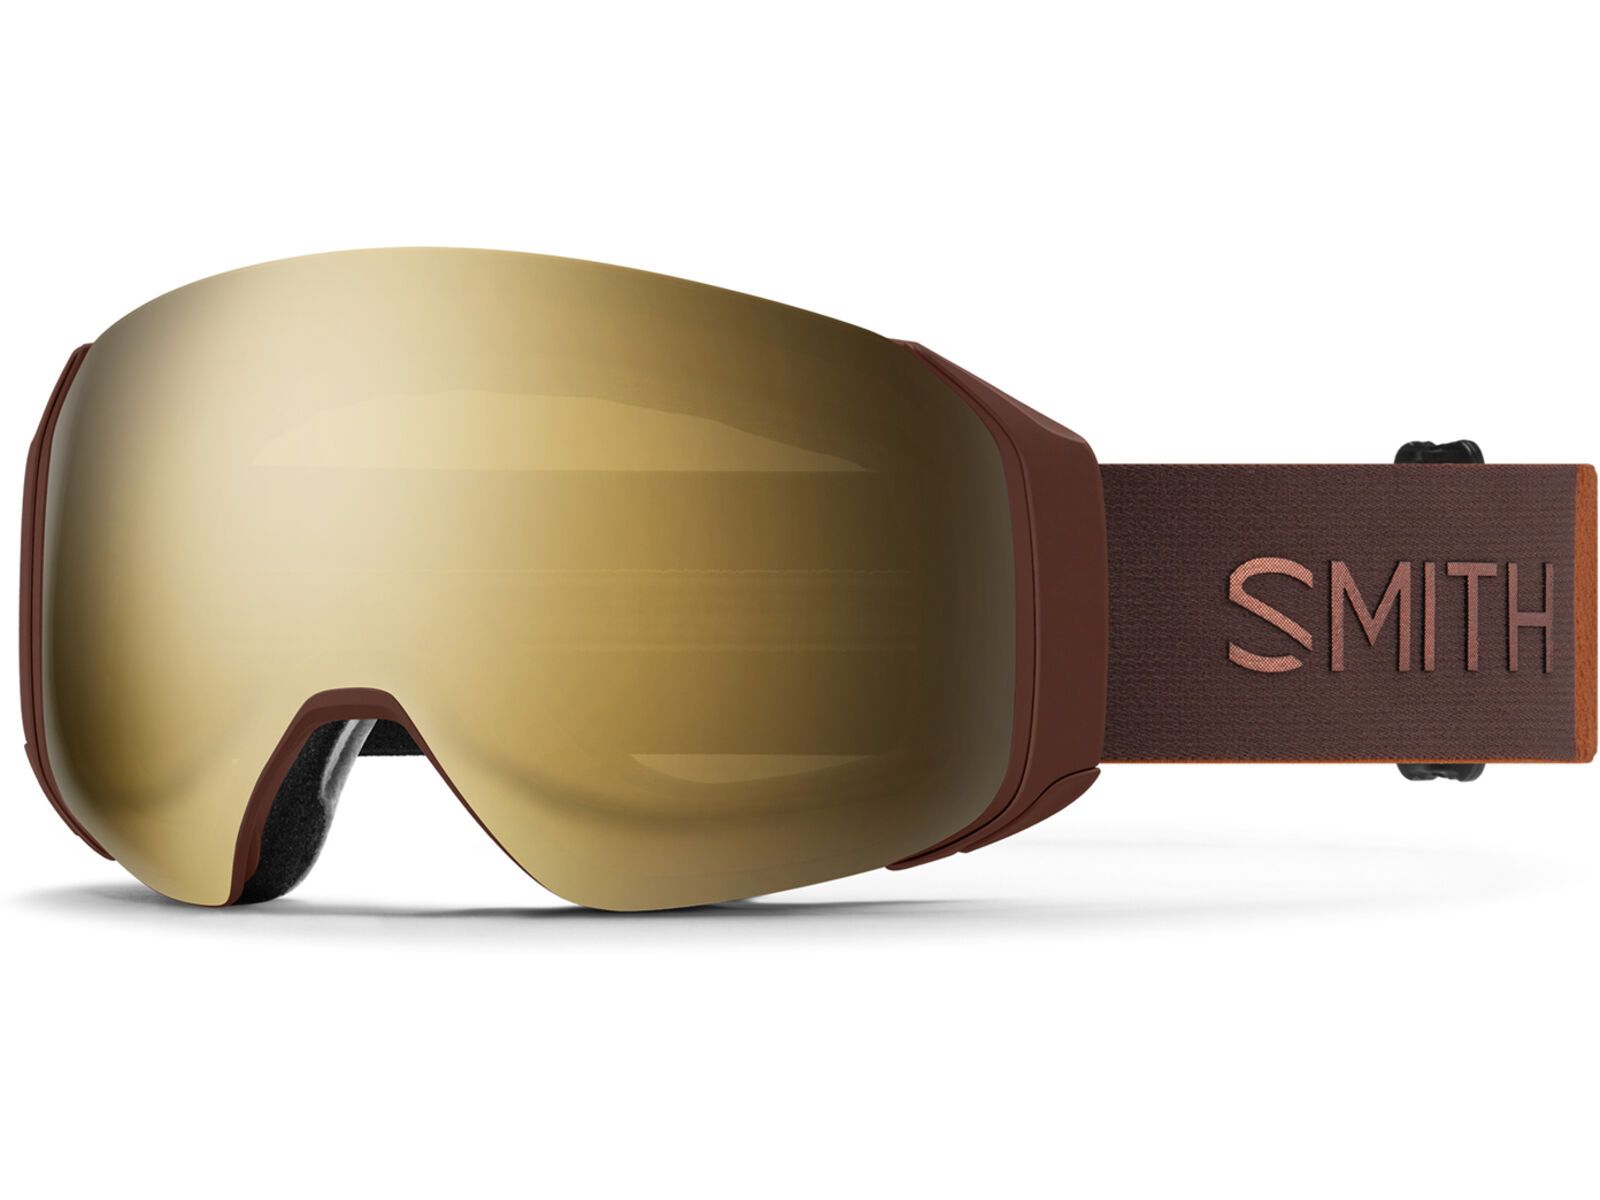 Smith 4D Mag S - ChromaPop Sun Black Gold Mir, sepia luxe | Bild 1